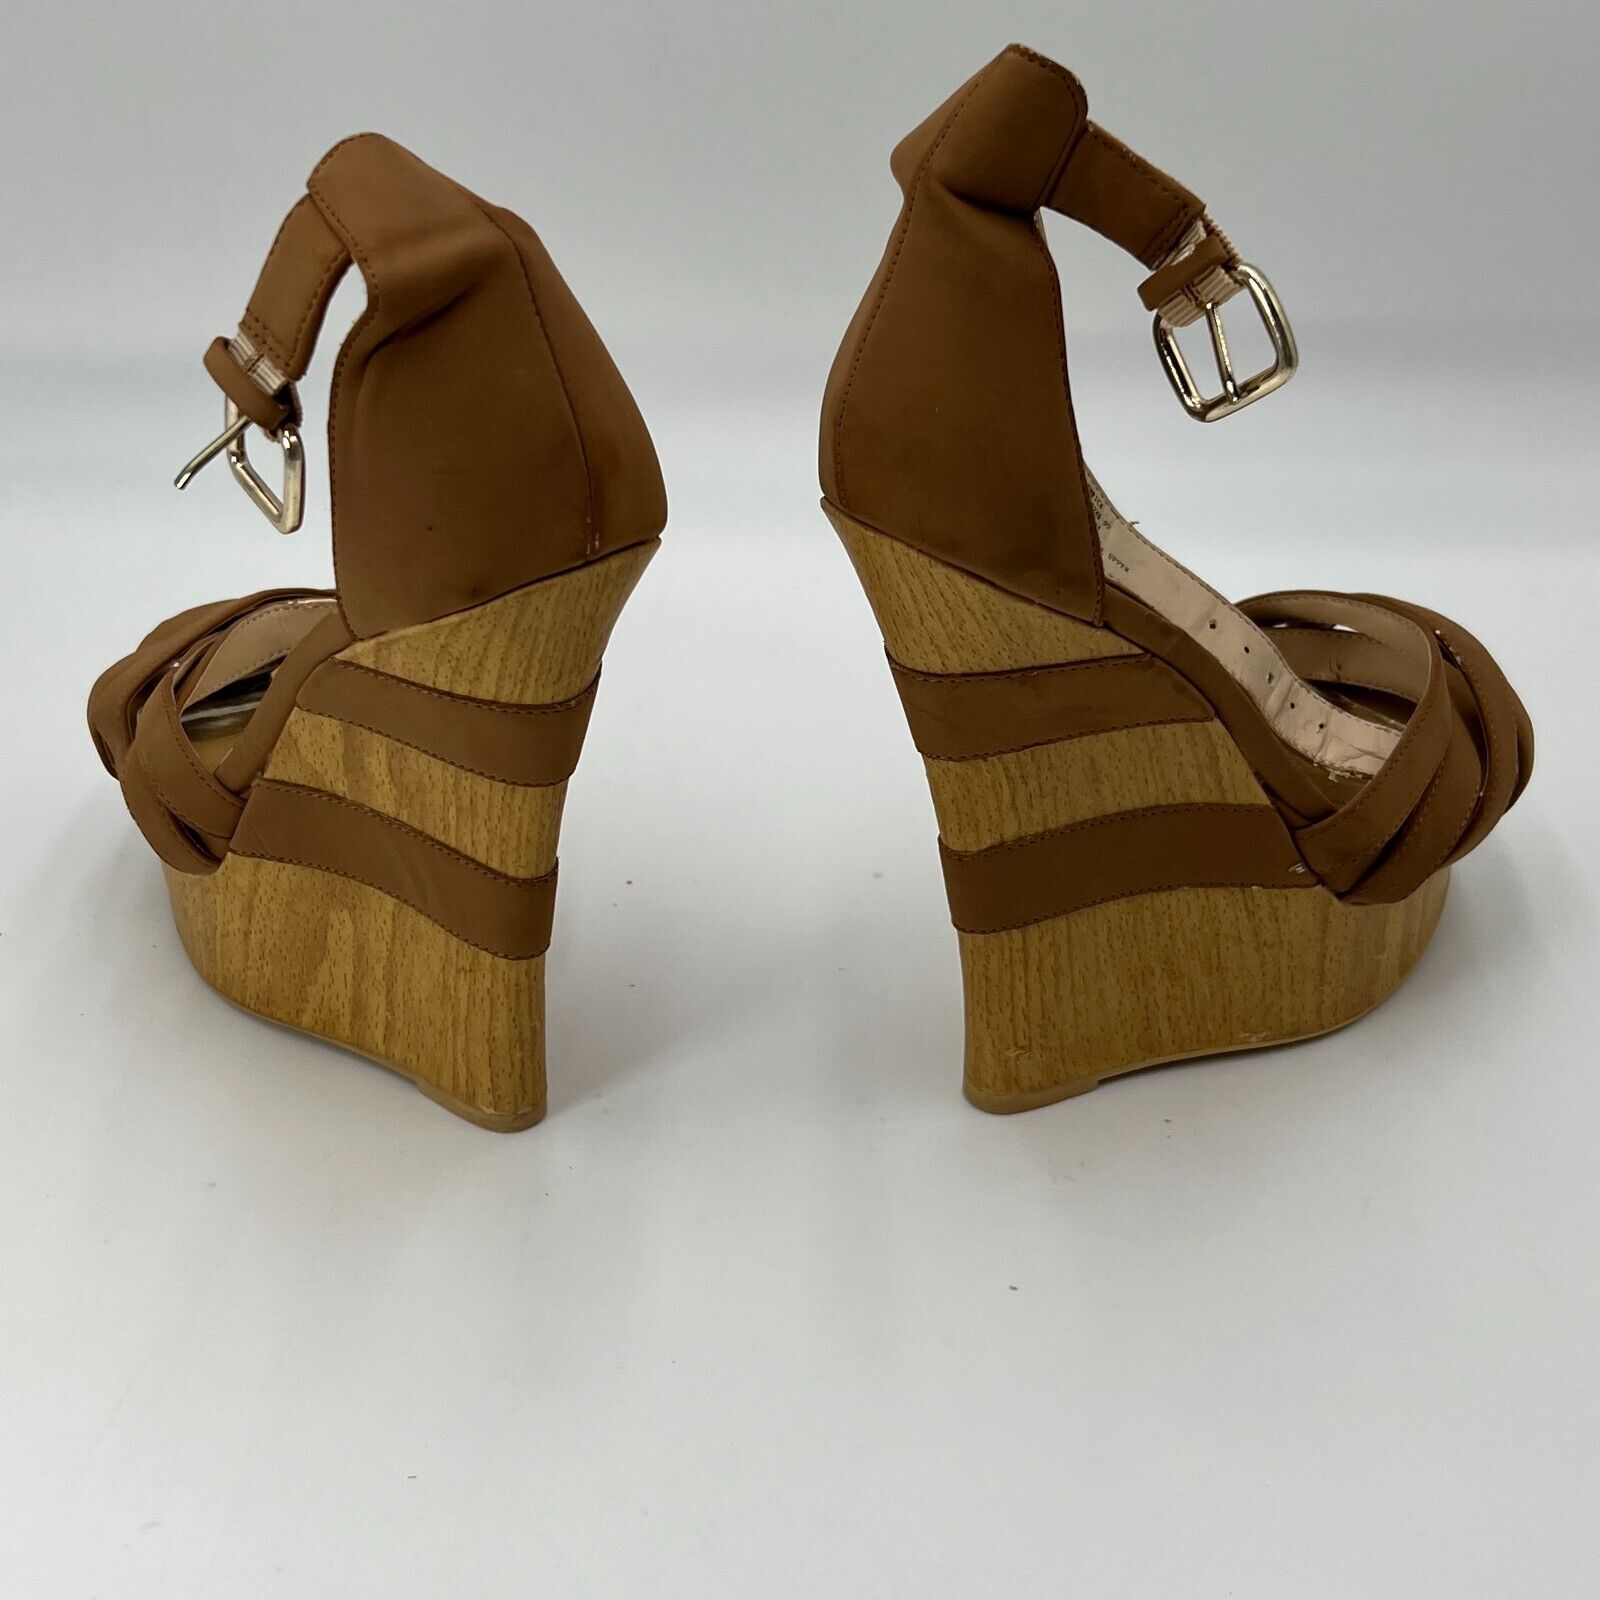 Just Fab Enrica Tan Platform Heel Sandals Adjustable Buckle Womens Size 9